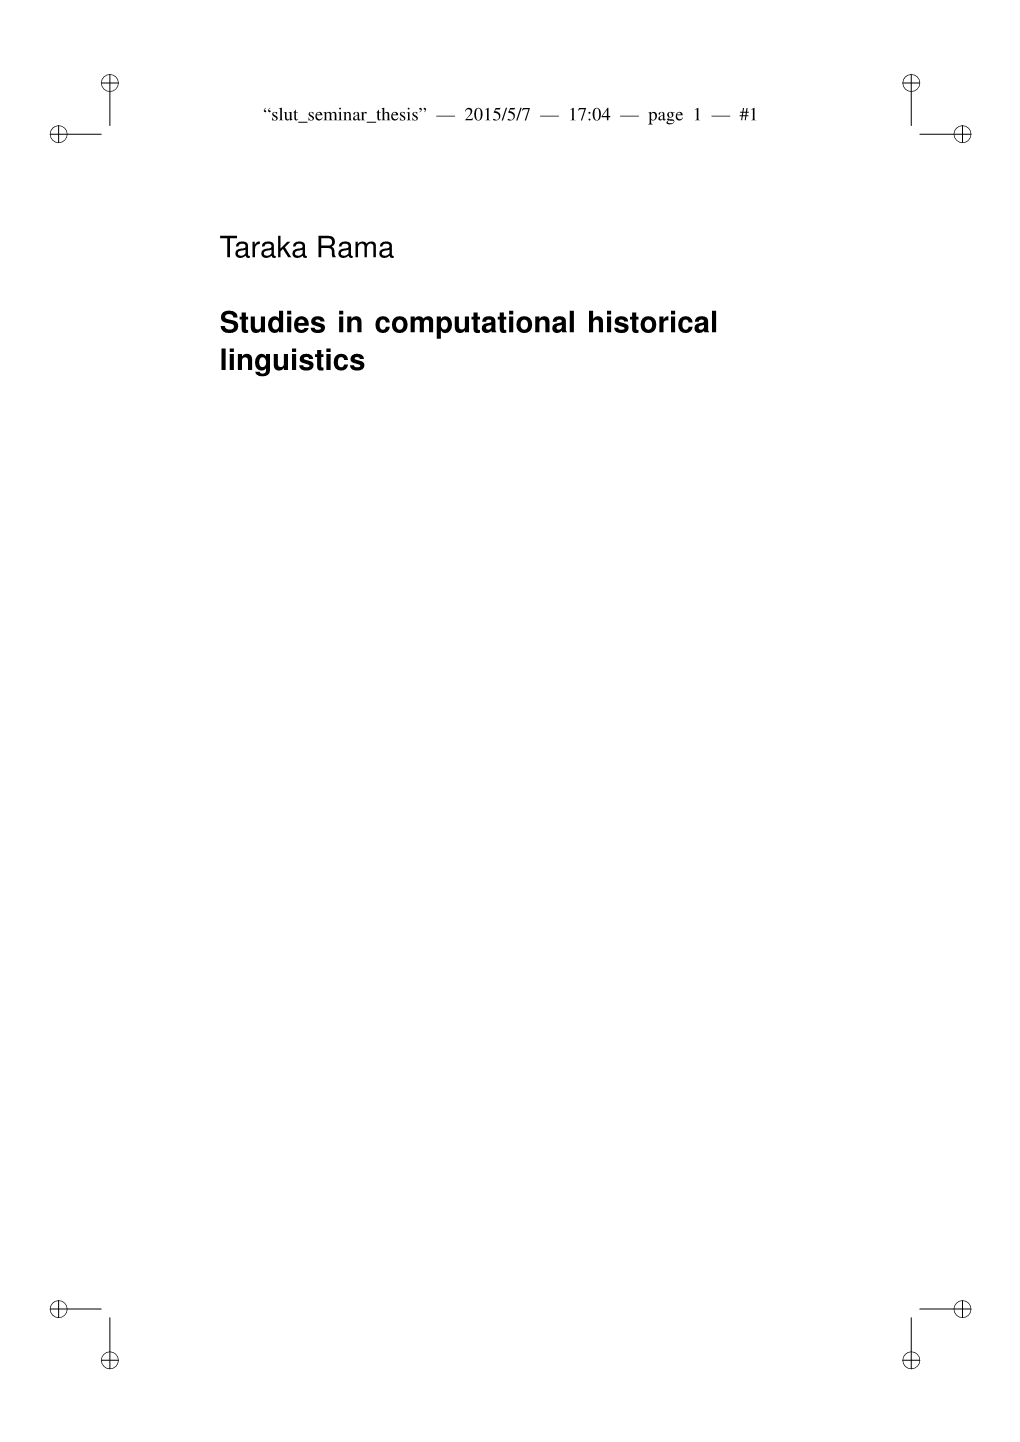 Taraka Rama Studies in Computational Historical Linguistics